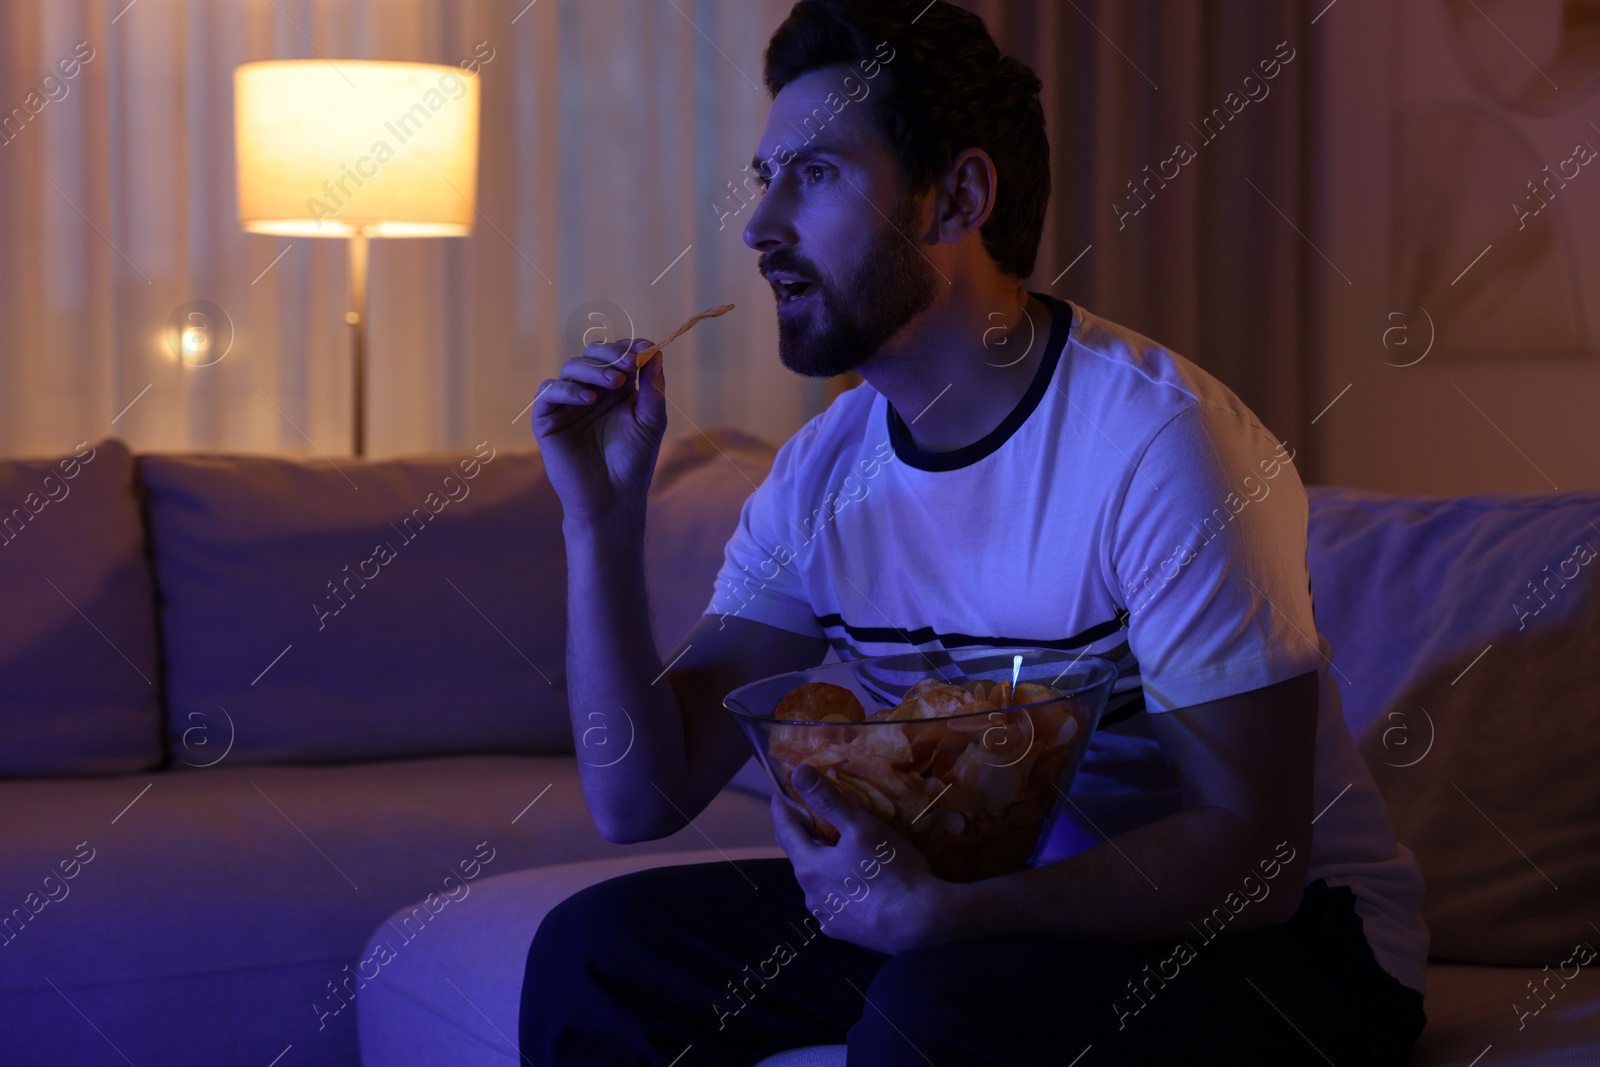 Photo of Man eating chips while watching TV on sofa at night. Bad habit